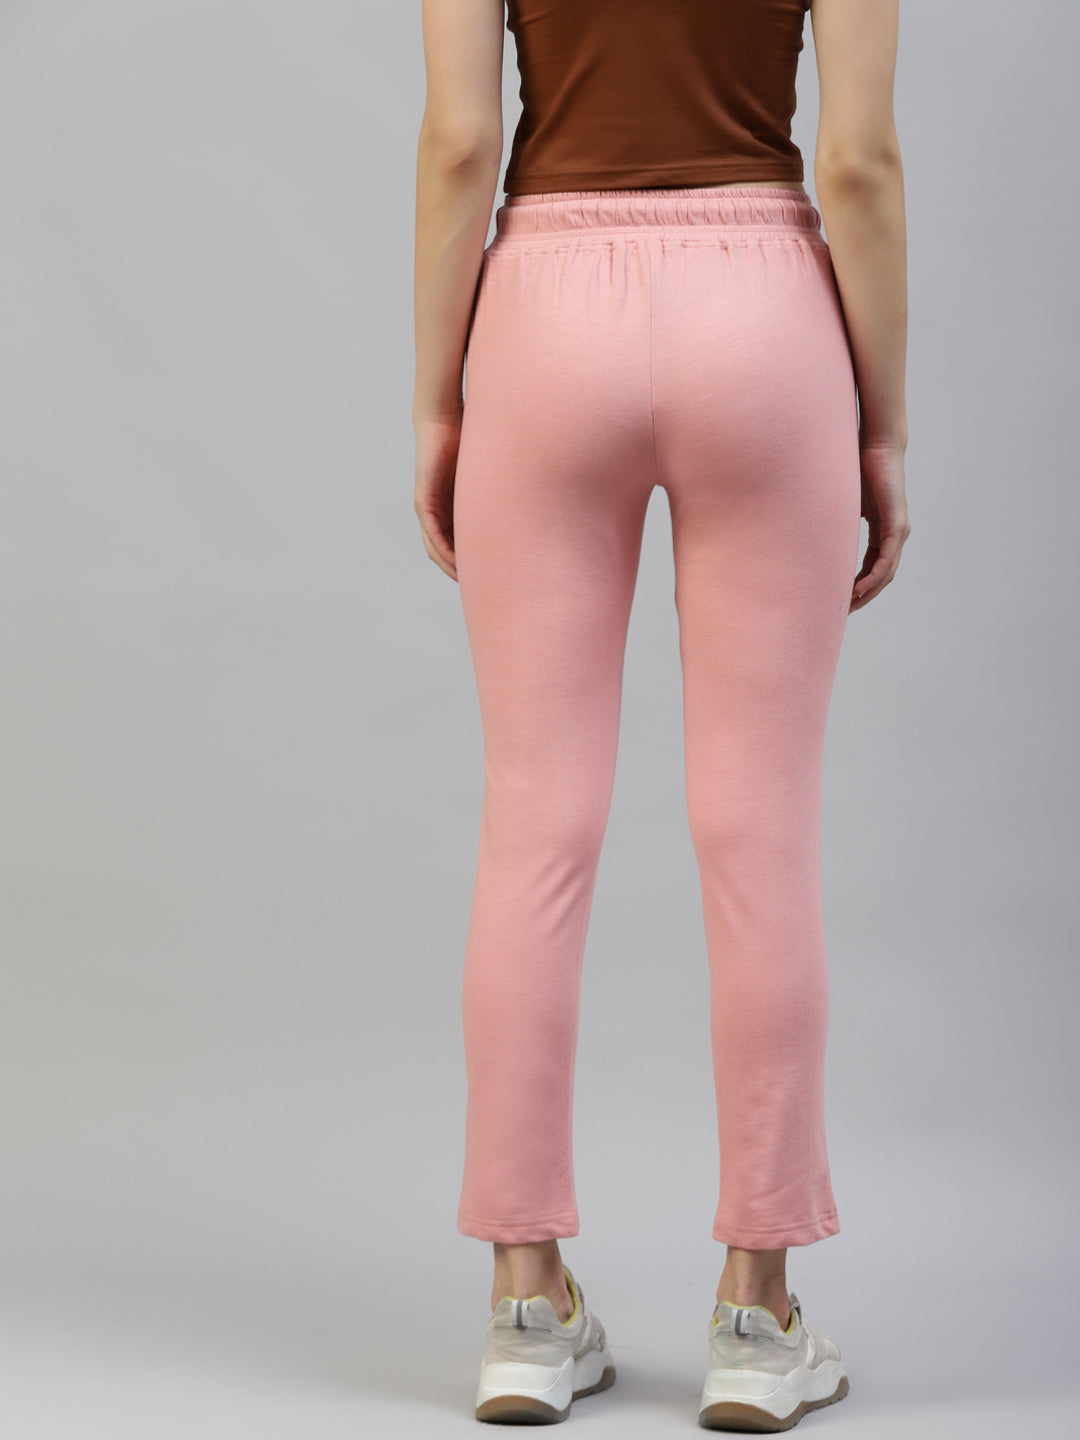 Laabha Women Pink Solid Track Pants